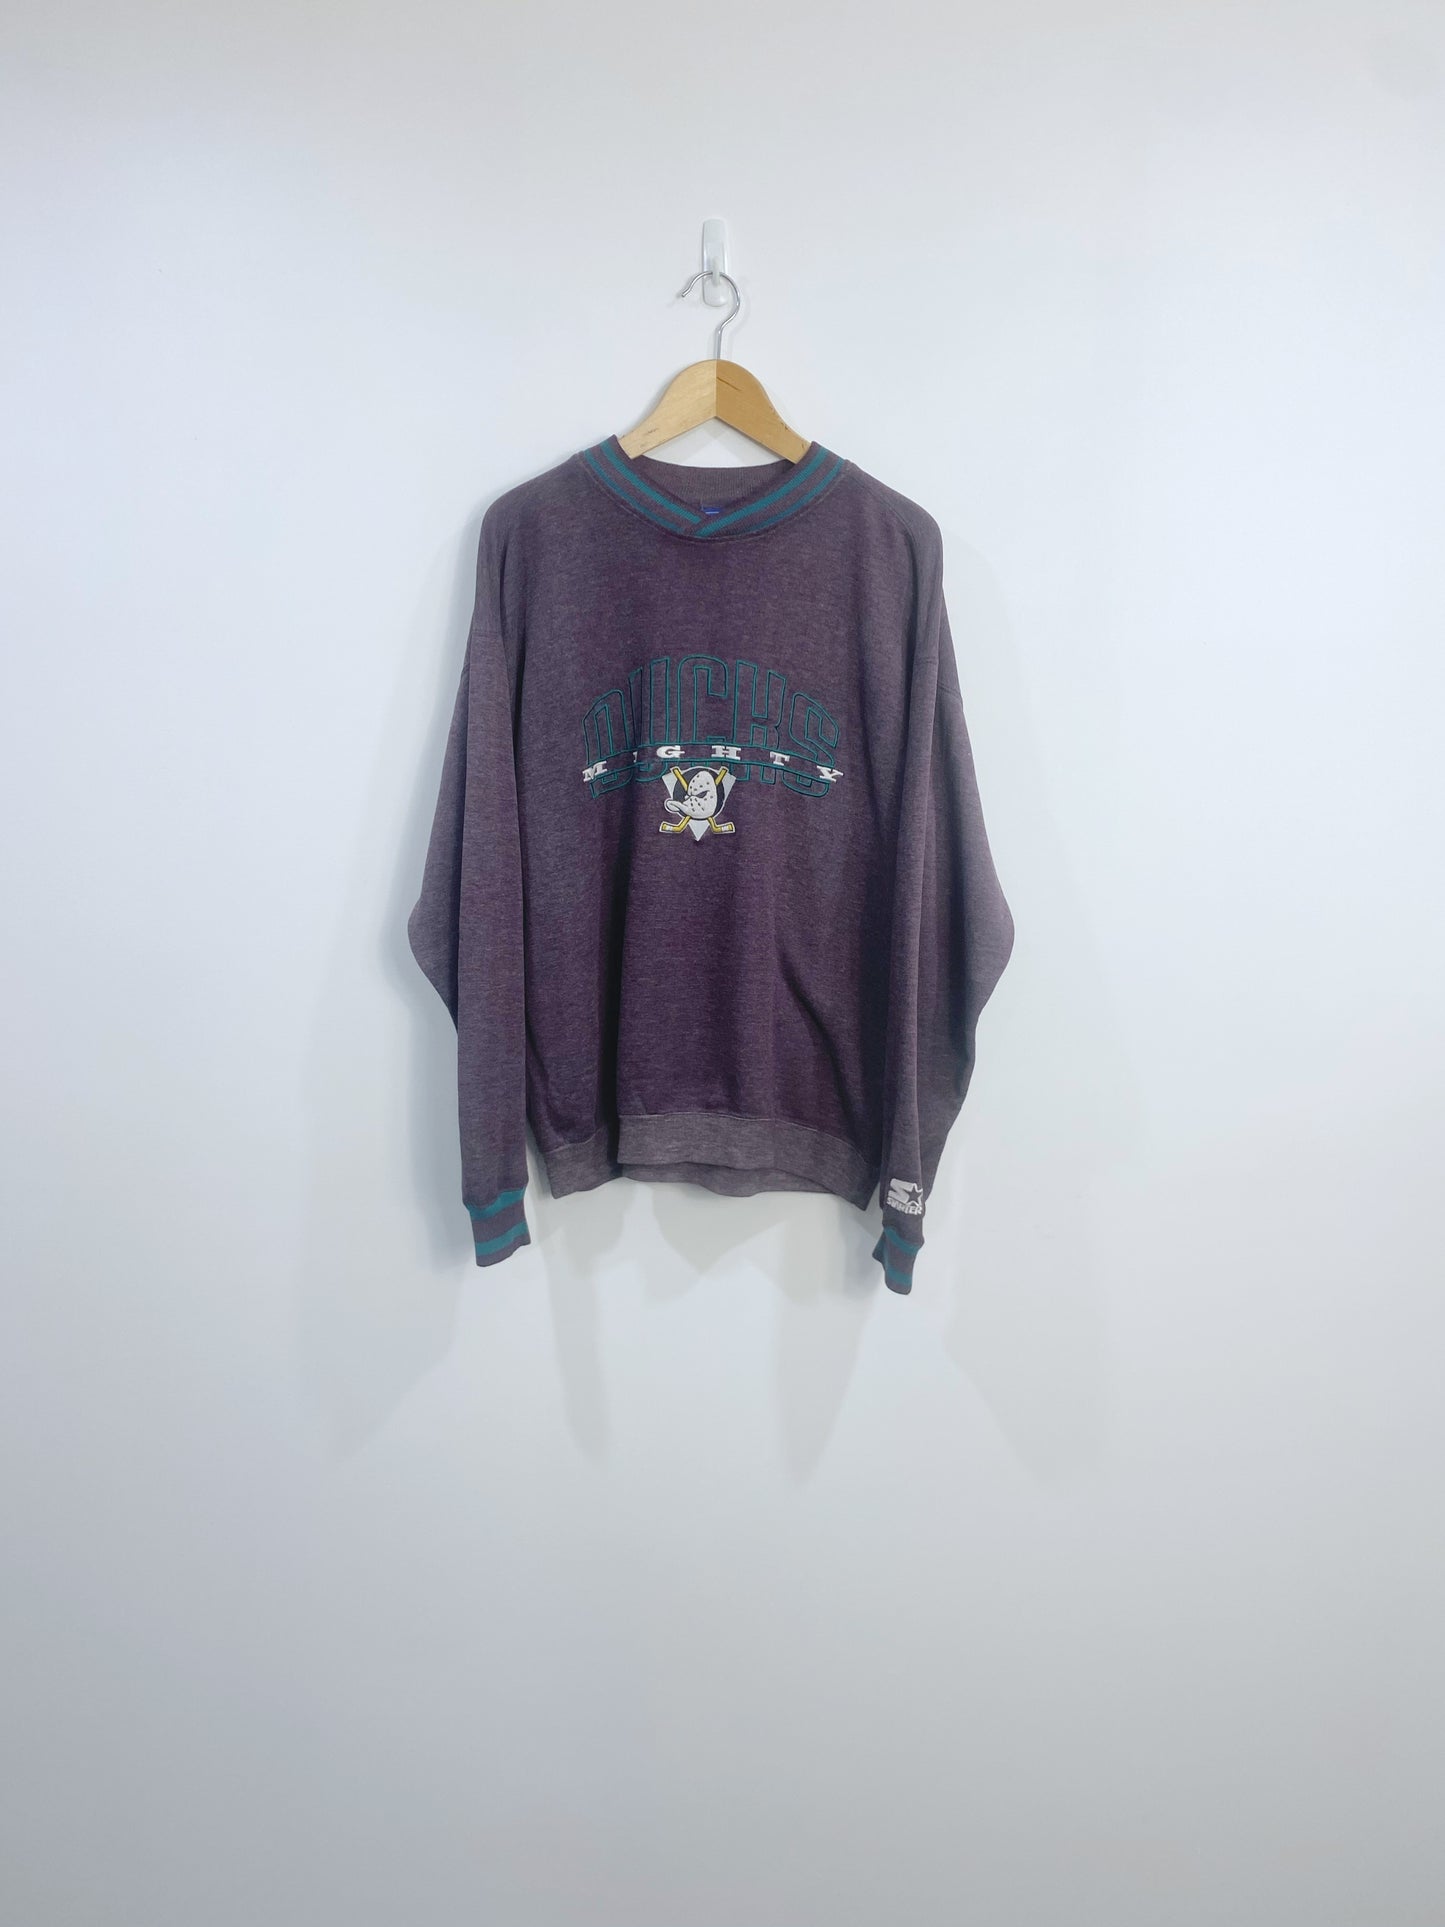 Vintage 90s Mighty Ducks Embroidered Sweatshirt L